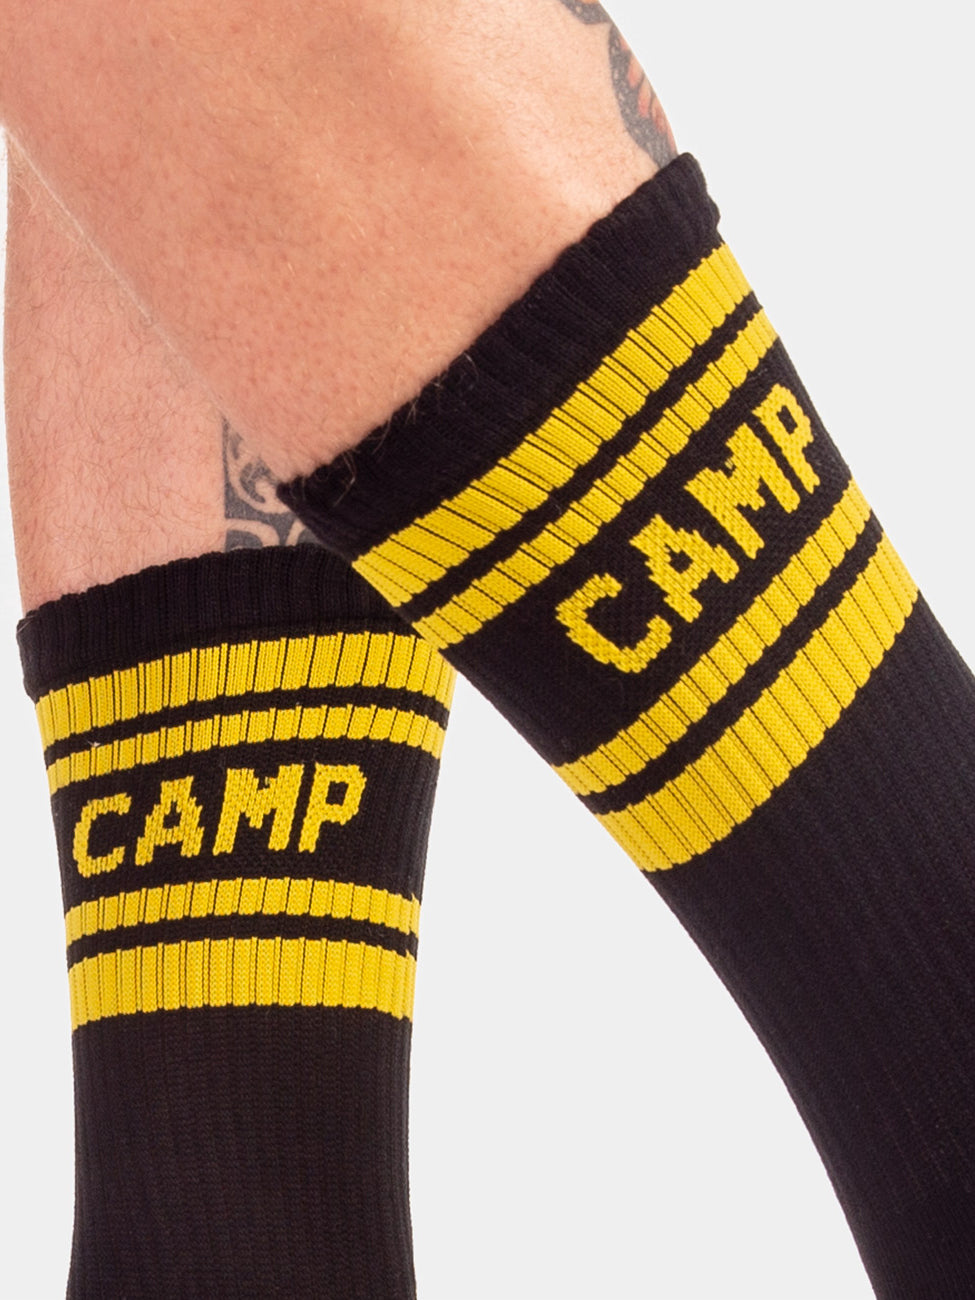 Barcode Berlin Camp Socks Yellow